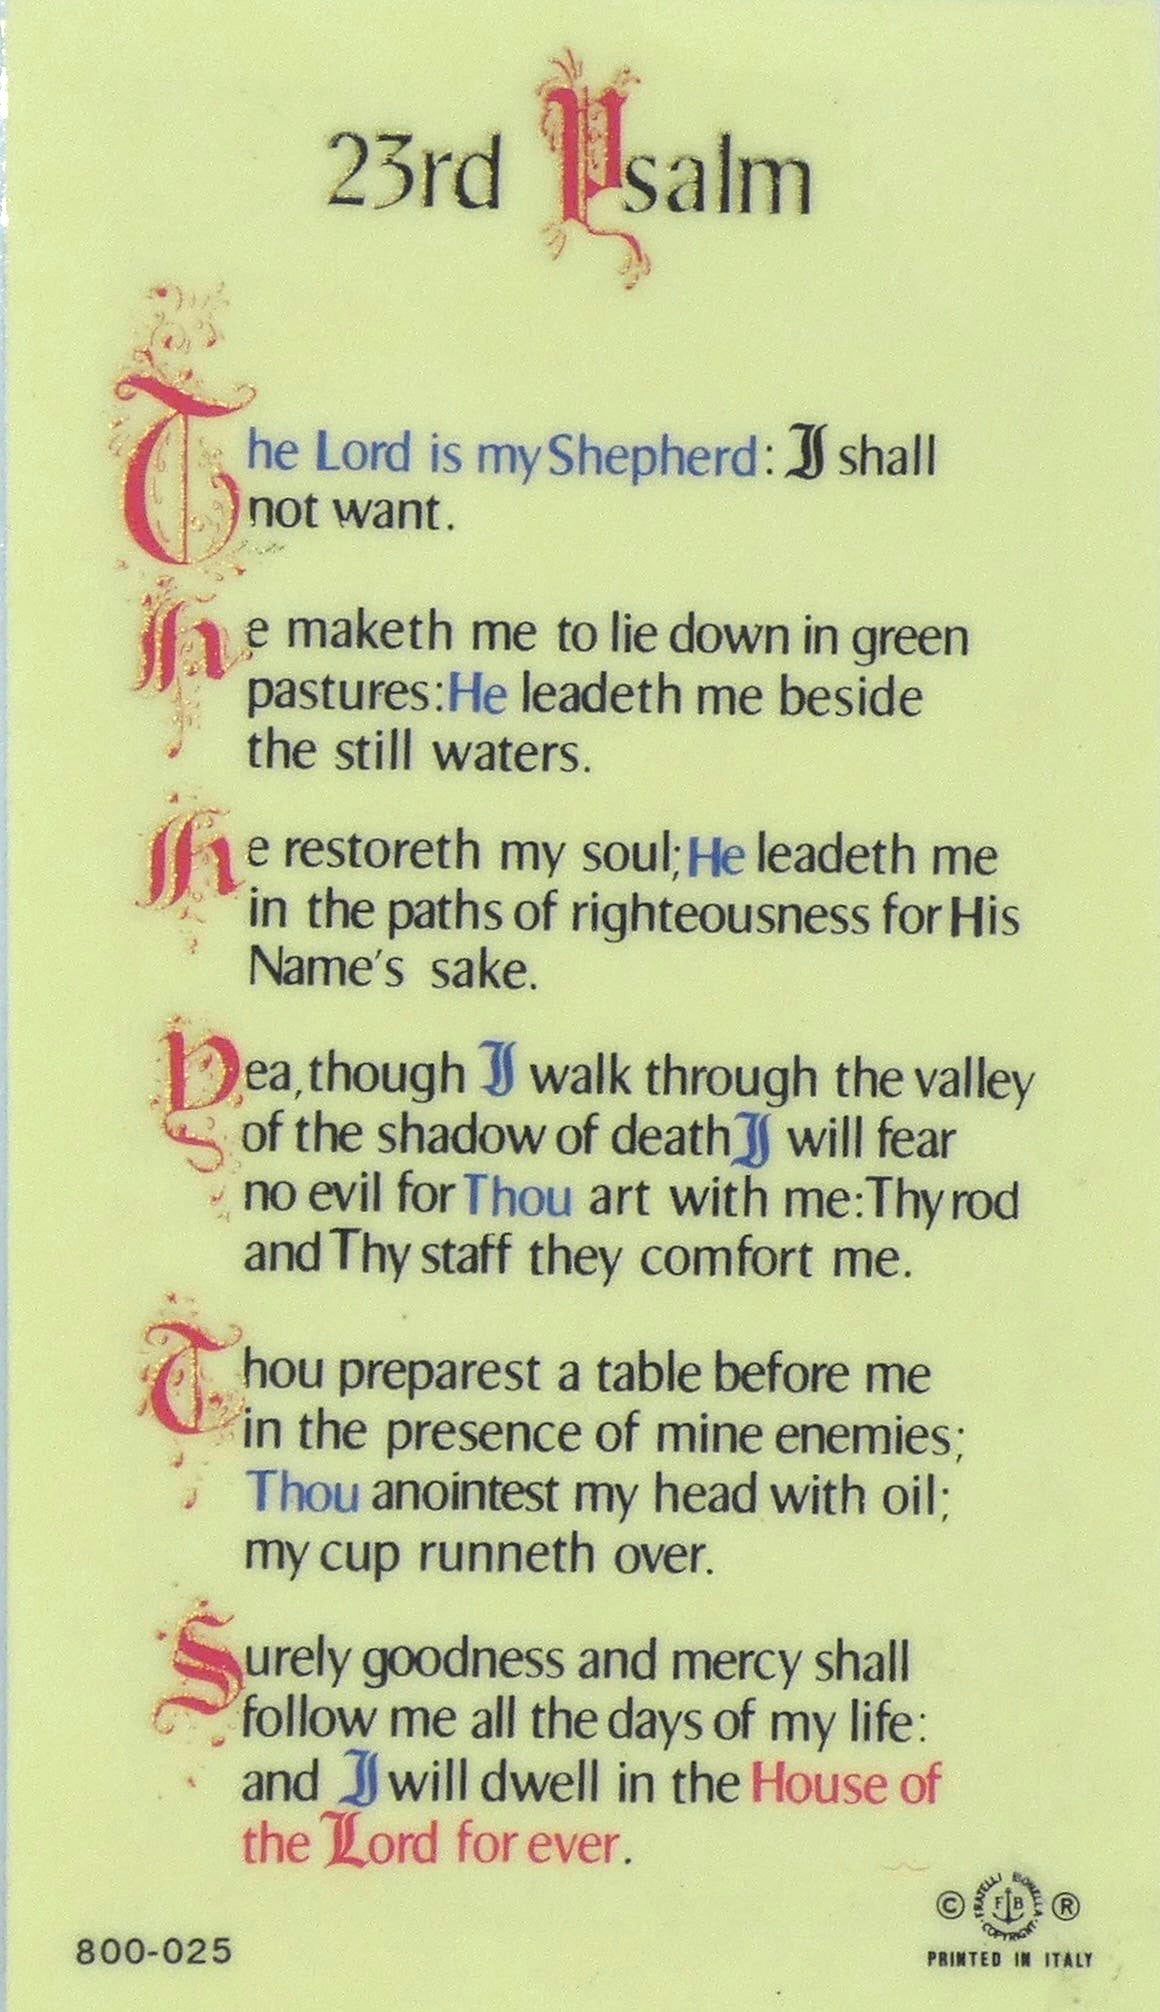 Good Shepherd Holy Card